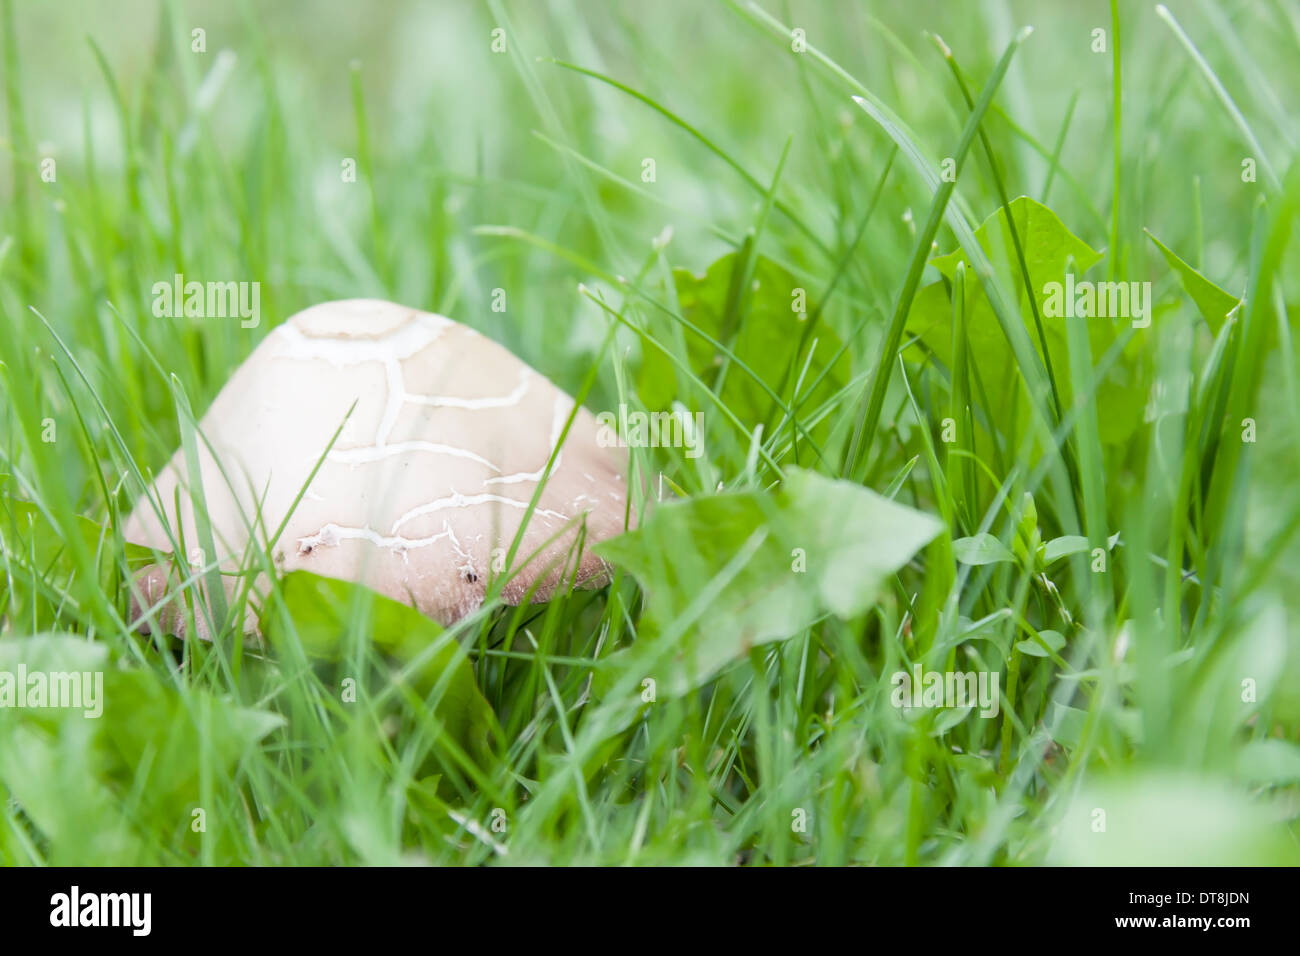 Inedible white mushroom in green grass Stock Photo